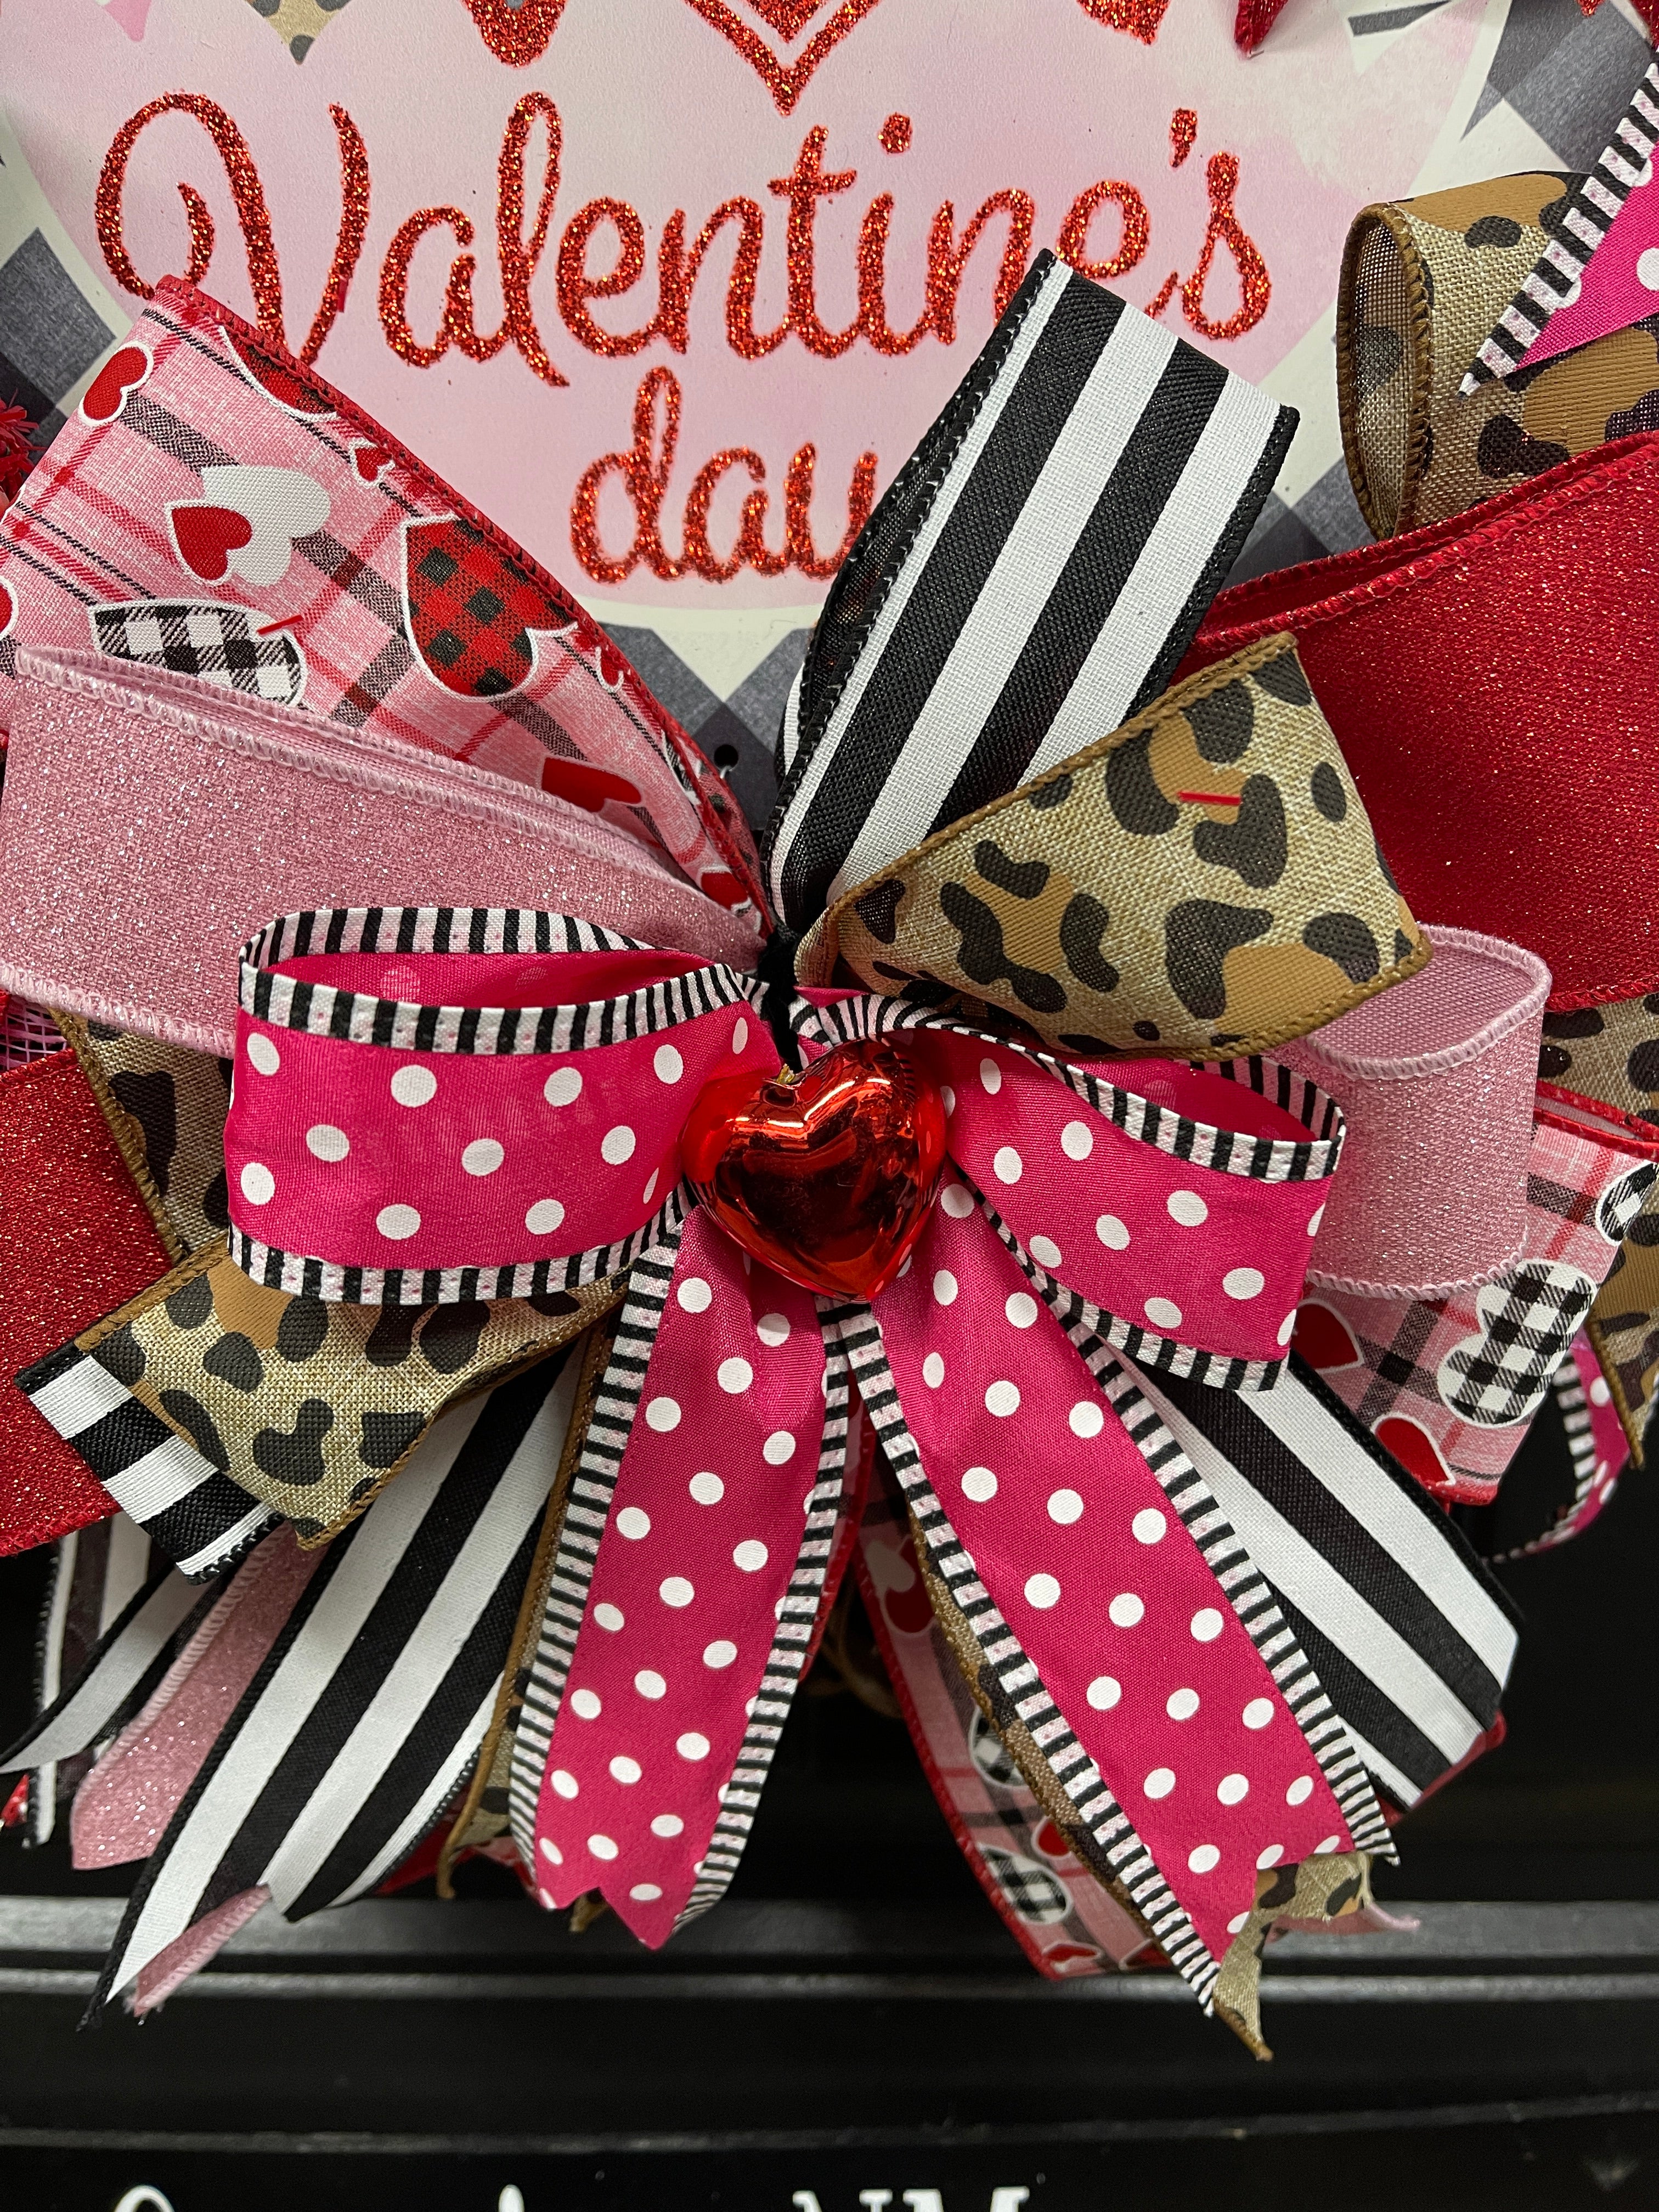 Happy Valentine’s Day Love Heart Wreath by KatsCreationsNMore